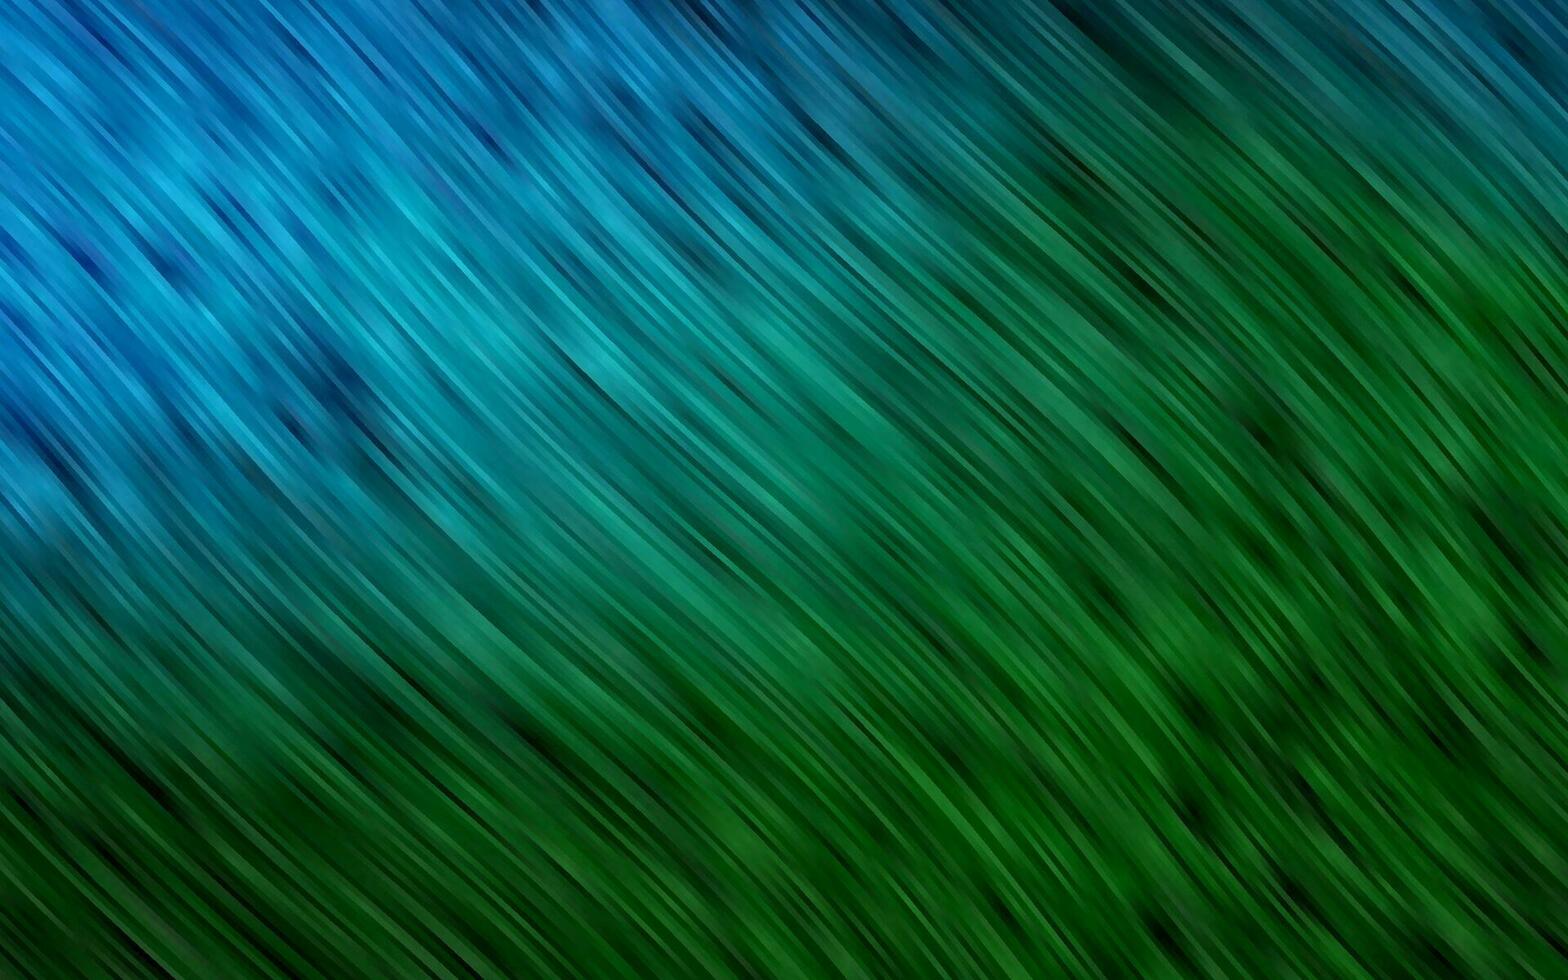 Dark Blue, Green vector pattern with liquid shapes.